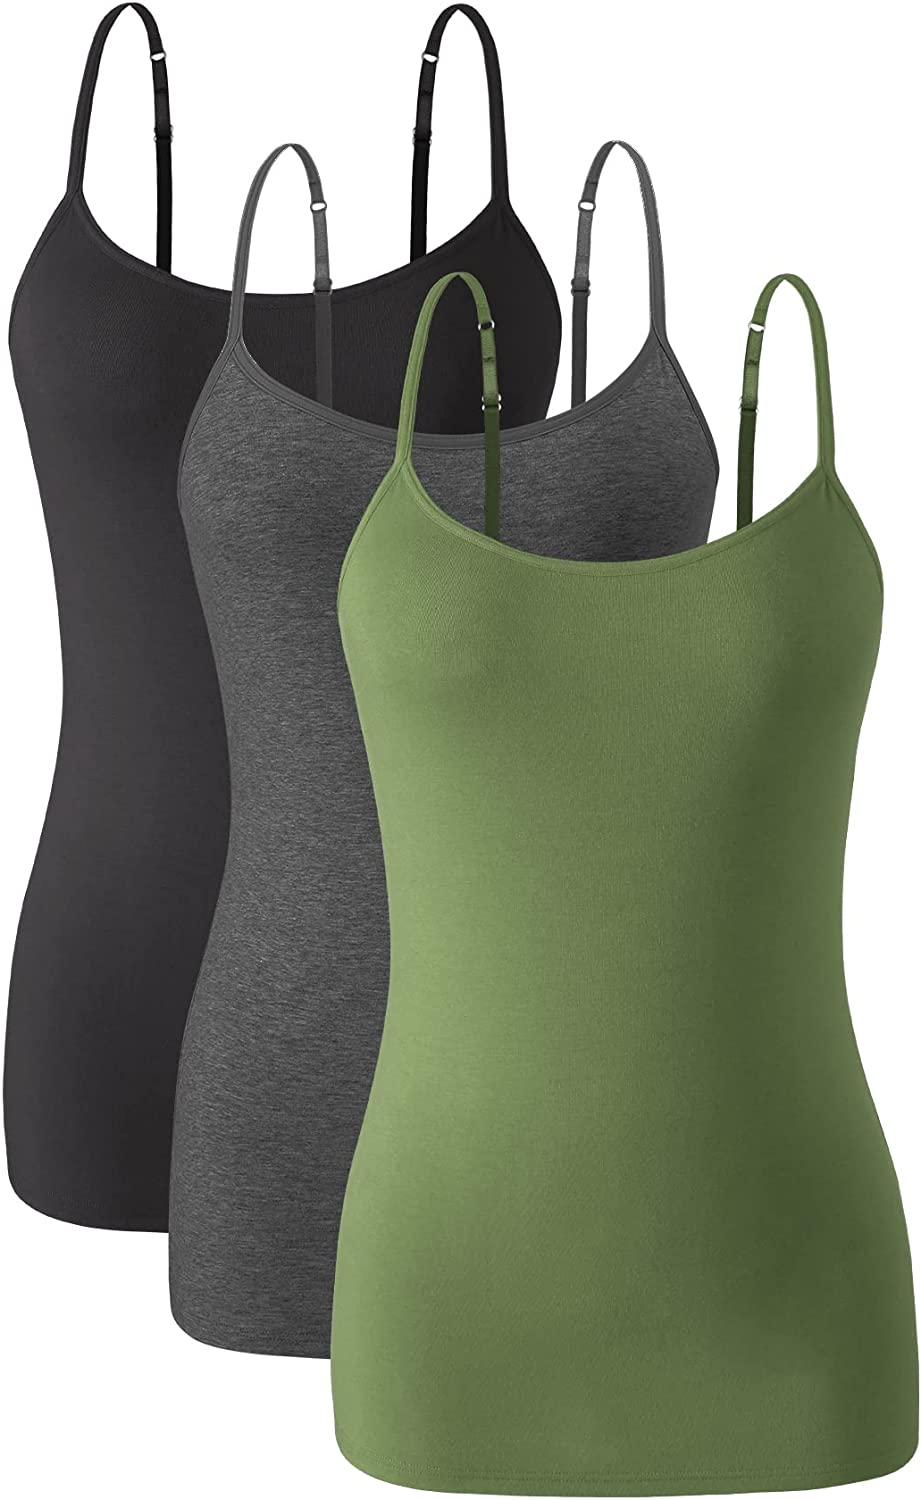 AMVELOP Tank Tops for Women Built in Bra Cotton Shelf Bra Tanks Layering  Undershirts 2-3 Pack